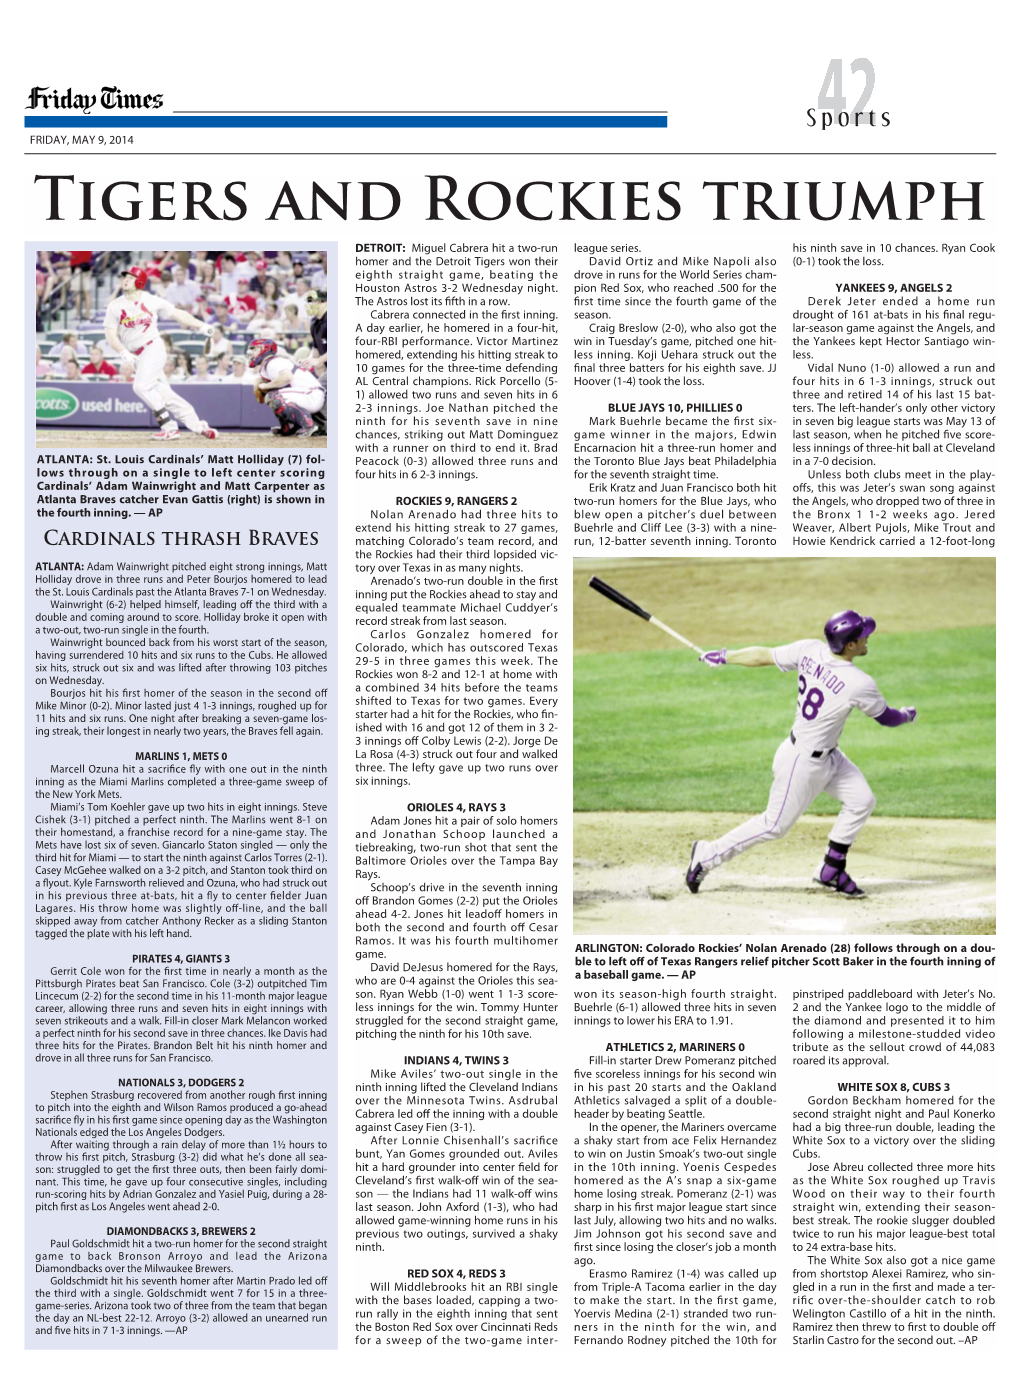 Tigers and Rockies Triumph